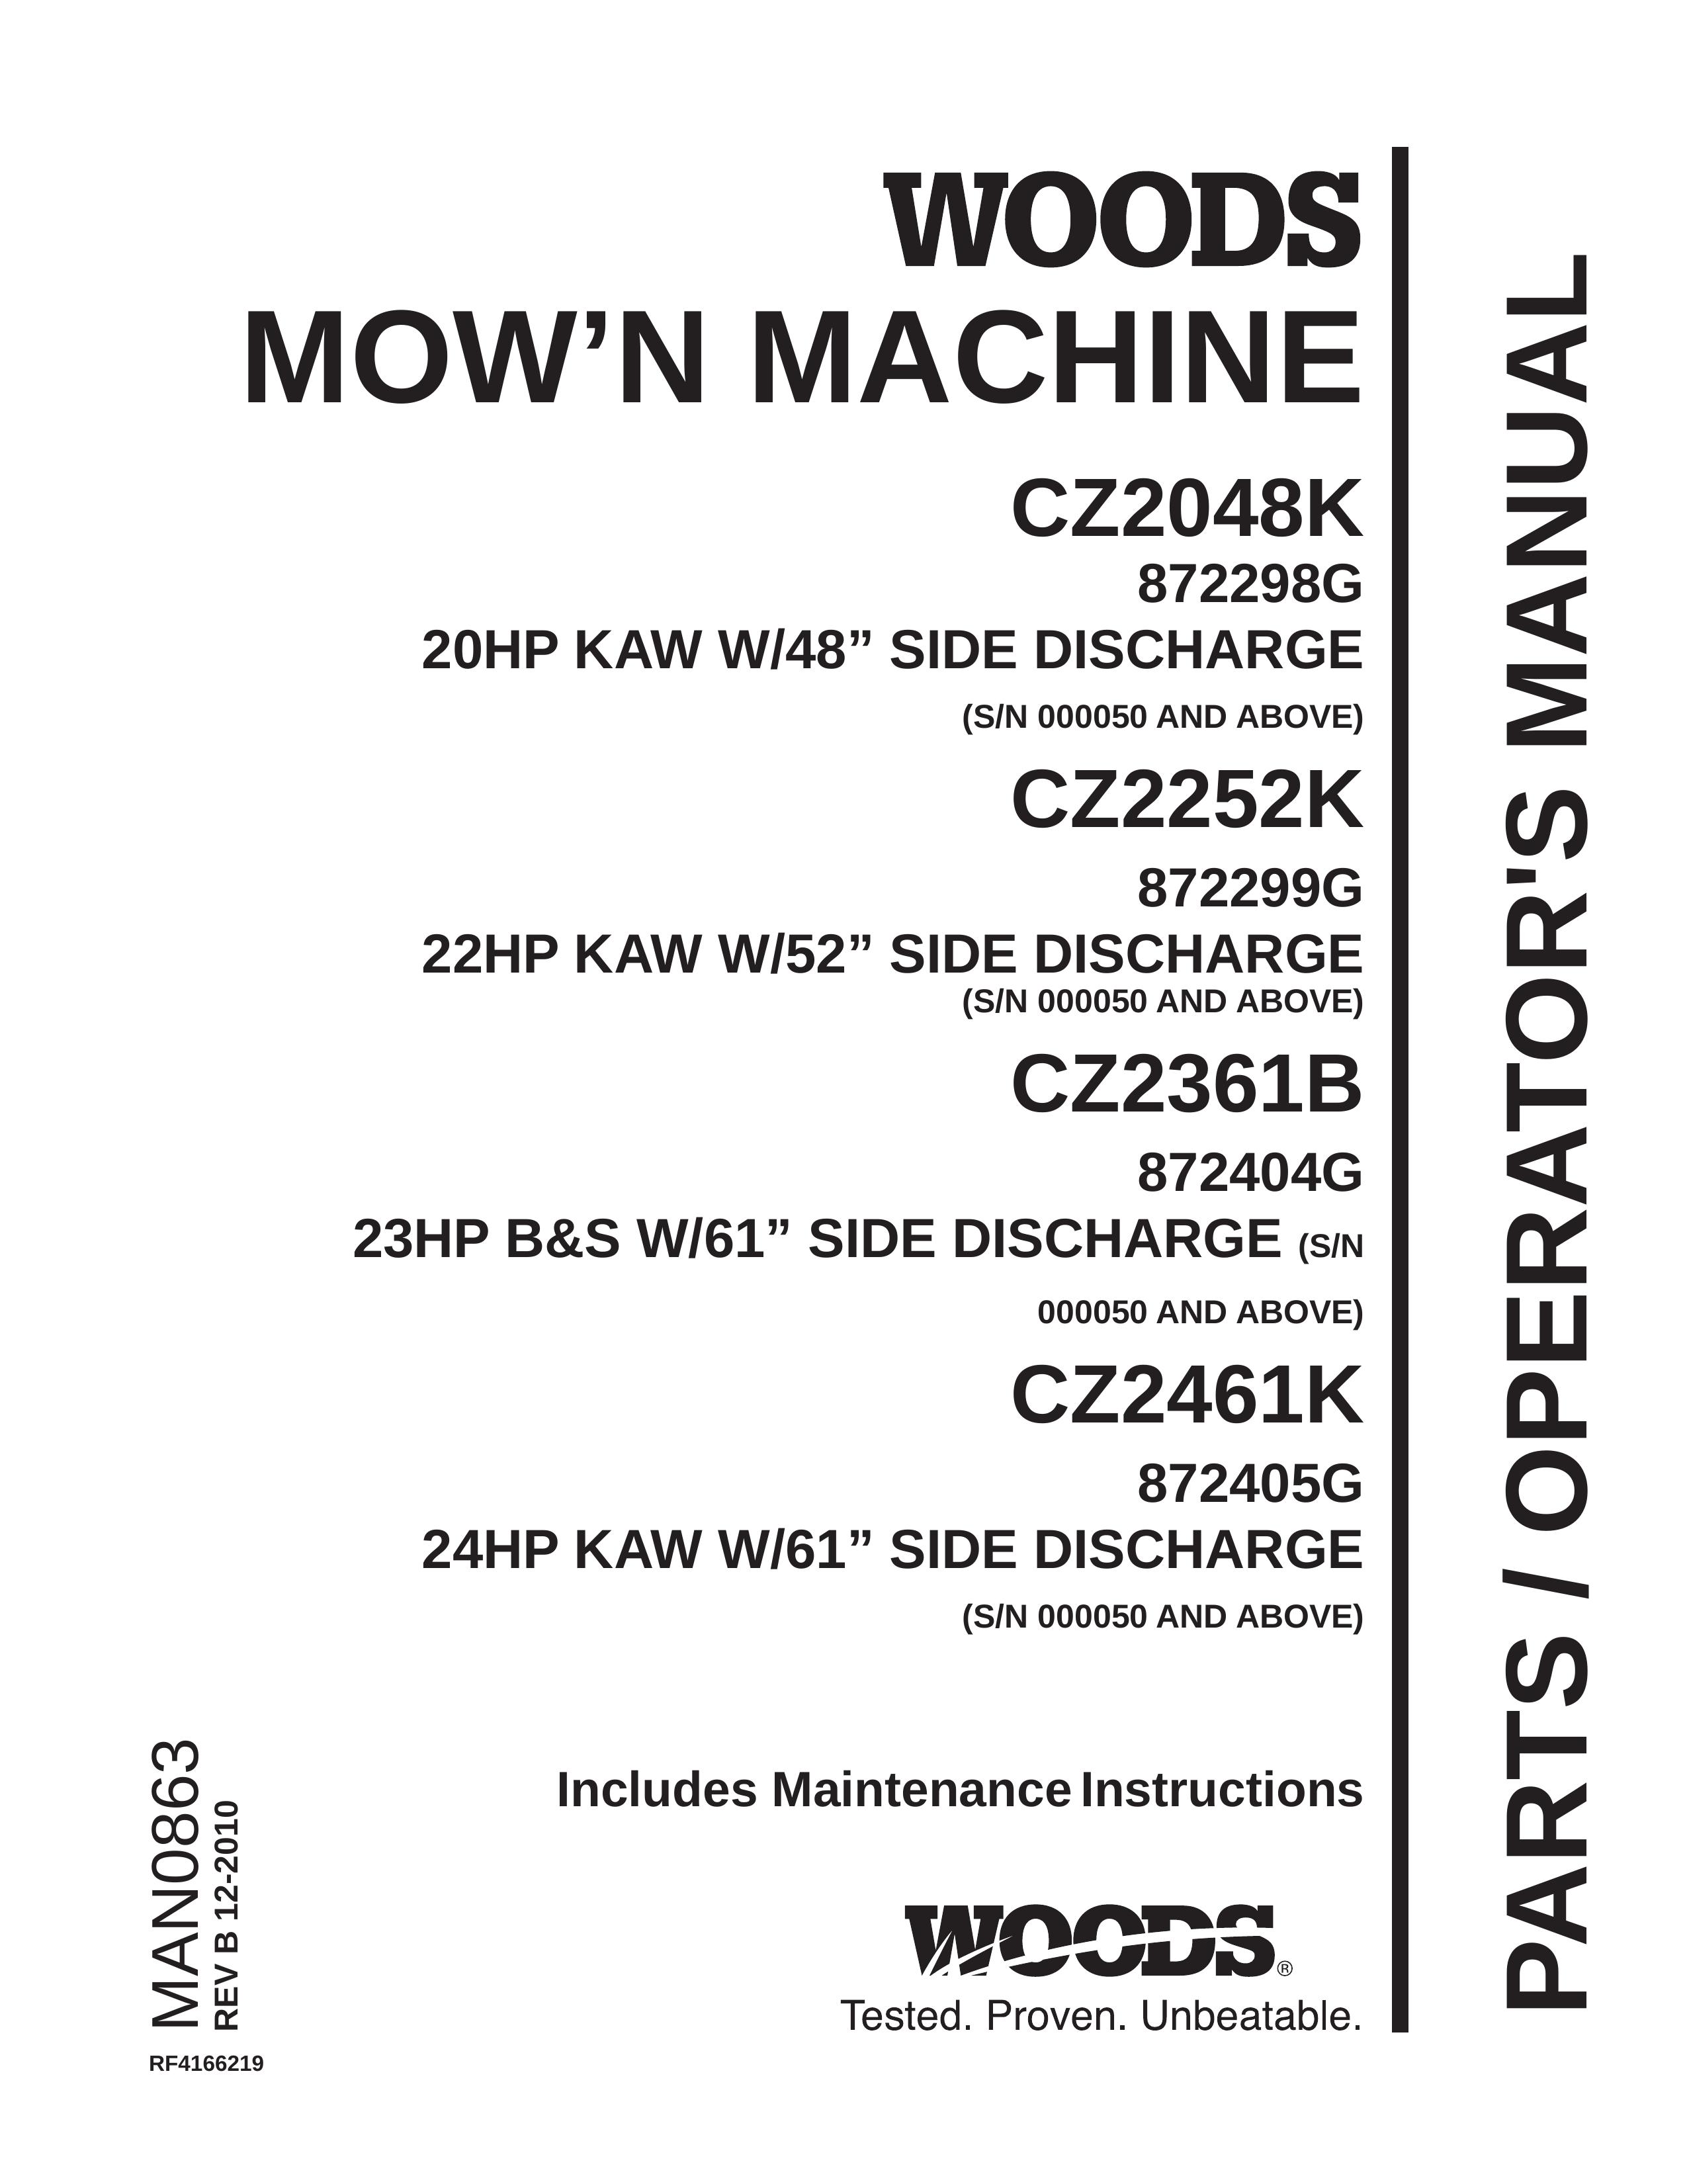 Woods Equipment CZ2048K Lawn Mower User Manual